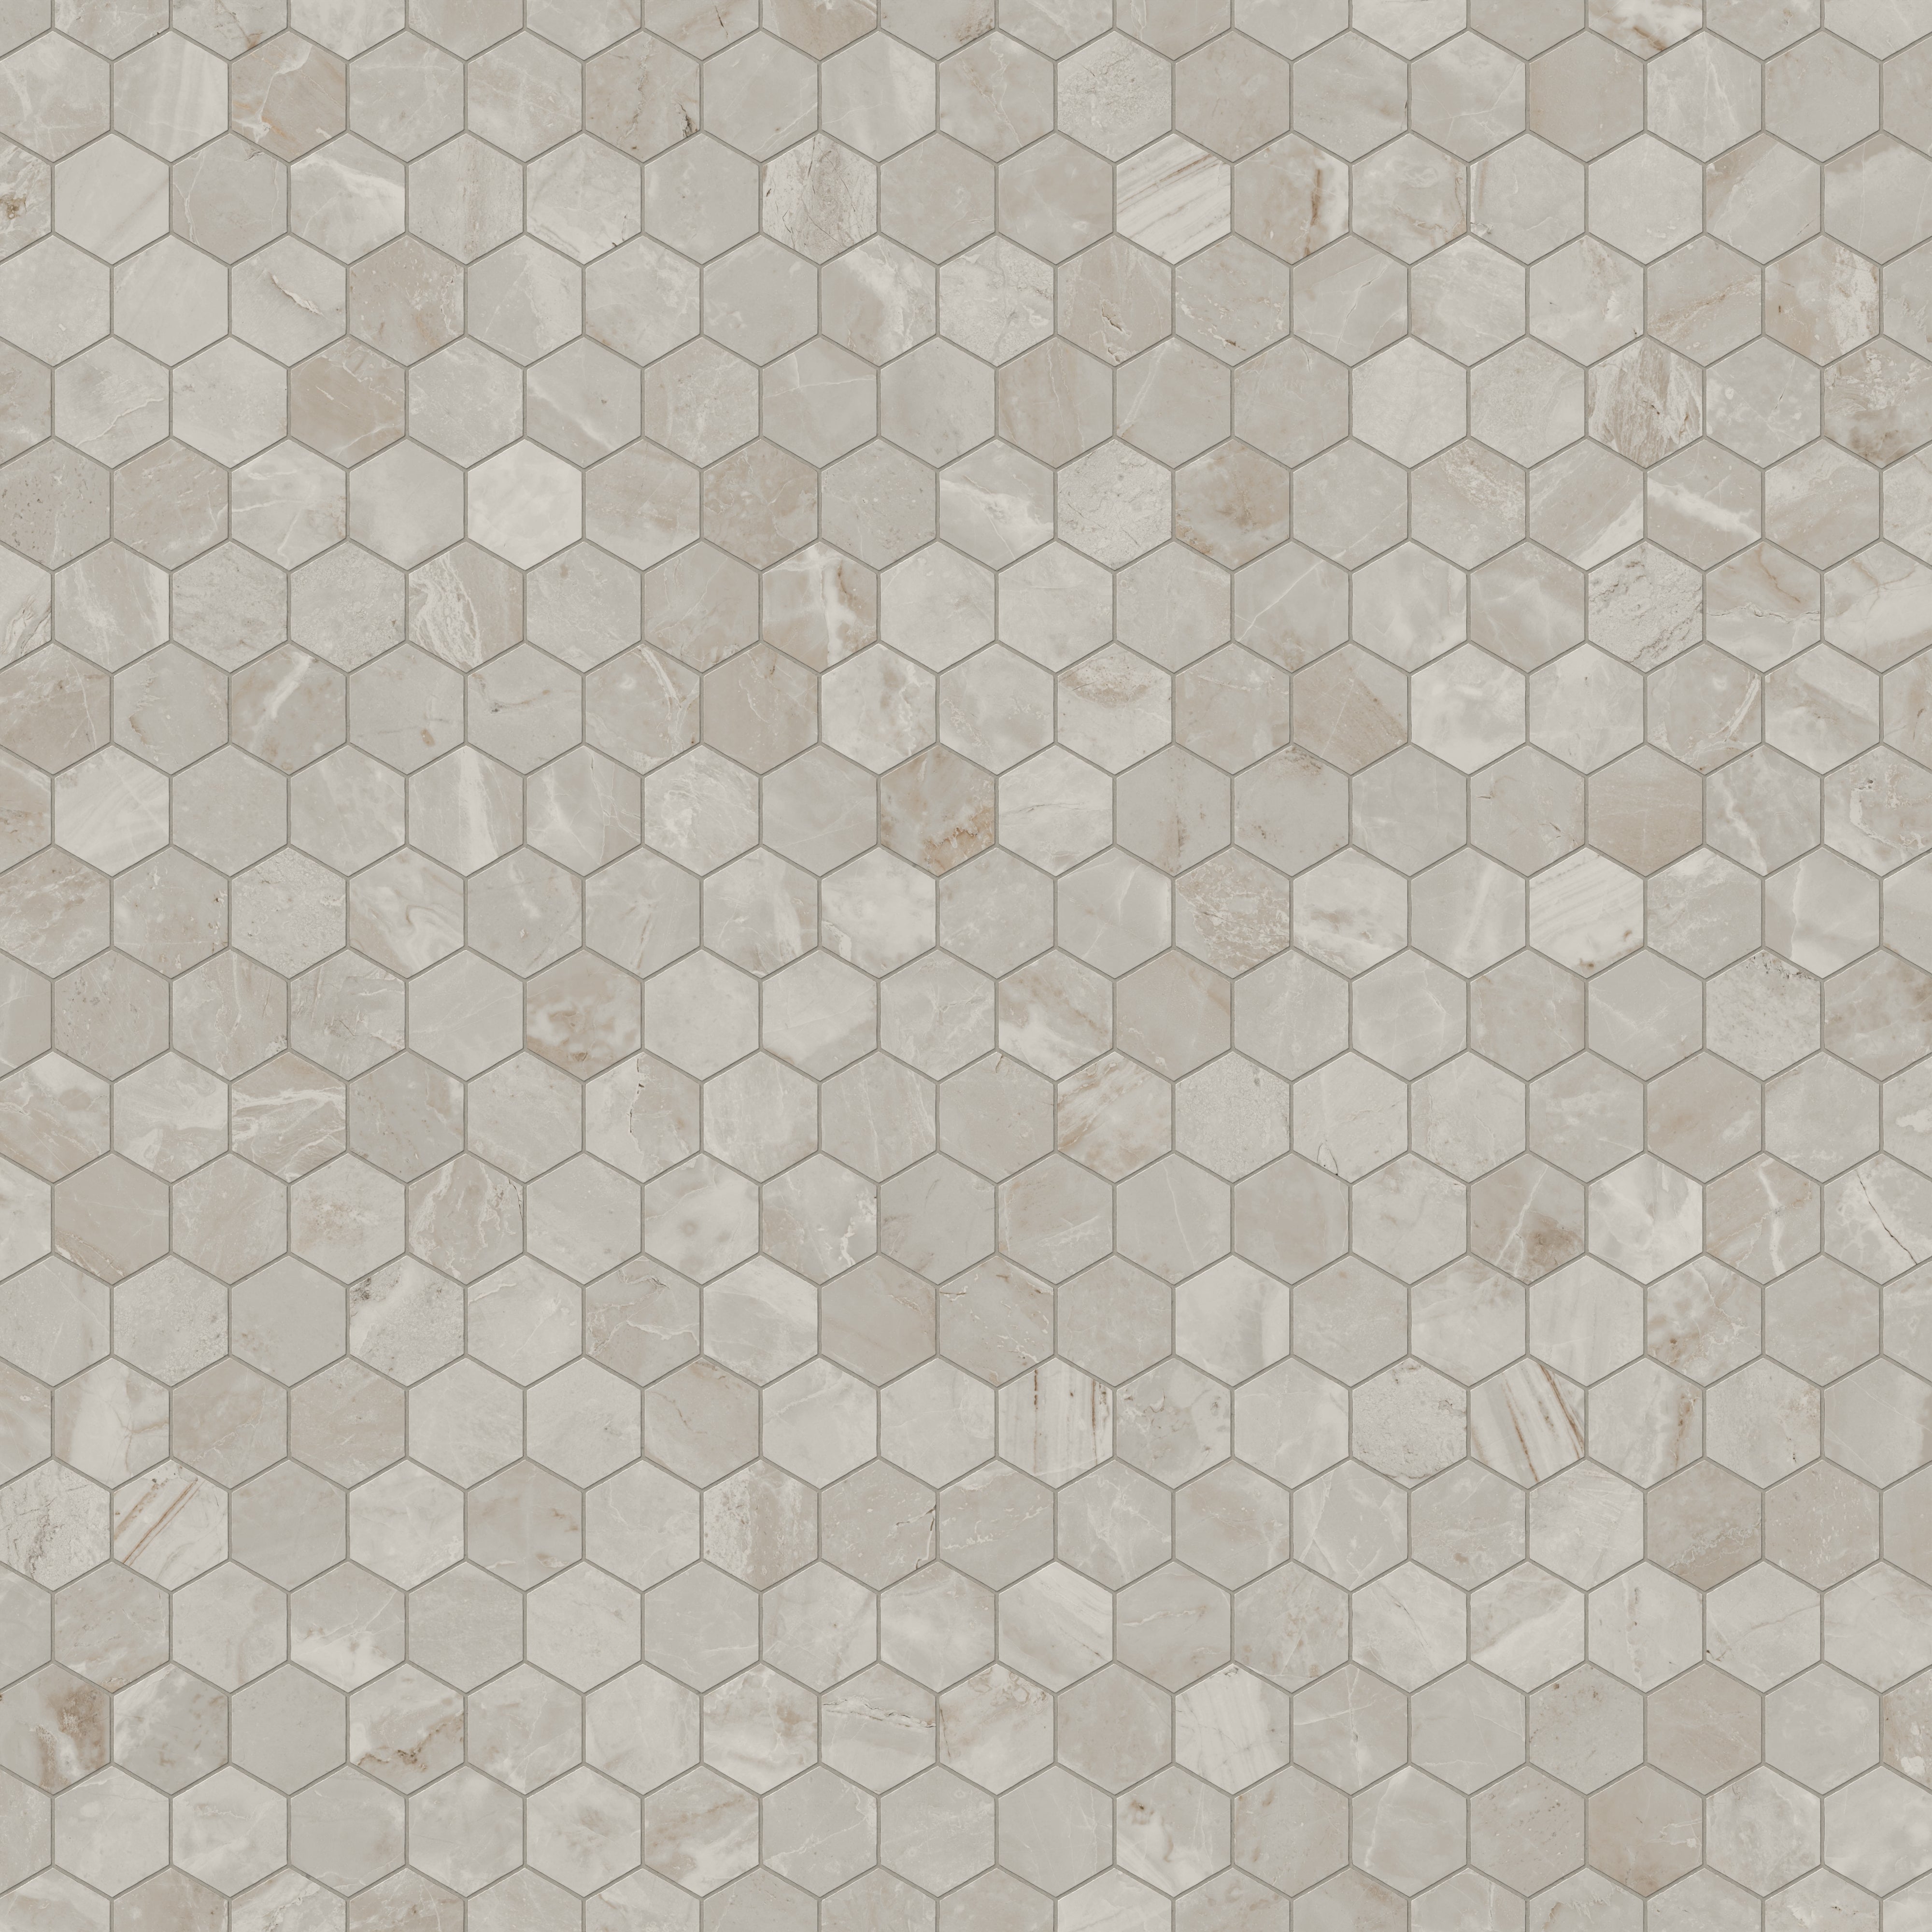 Blair 3x3 Polished Porcelain Hexagon Mosaic Tile in Oniciata Beige